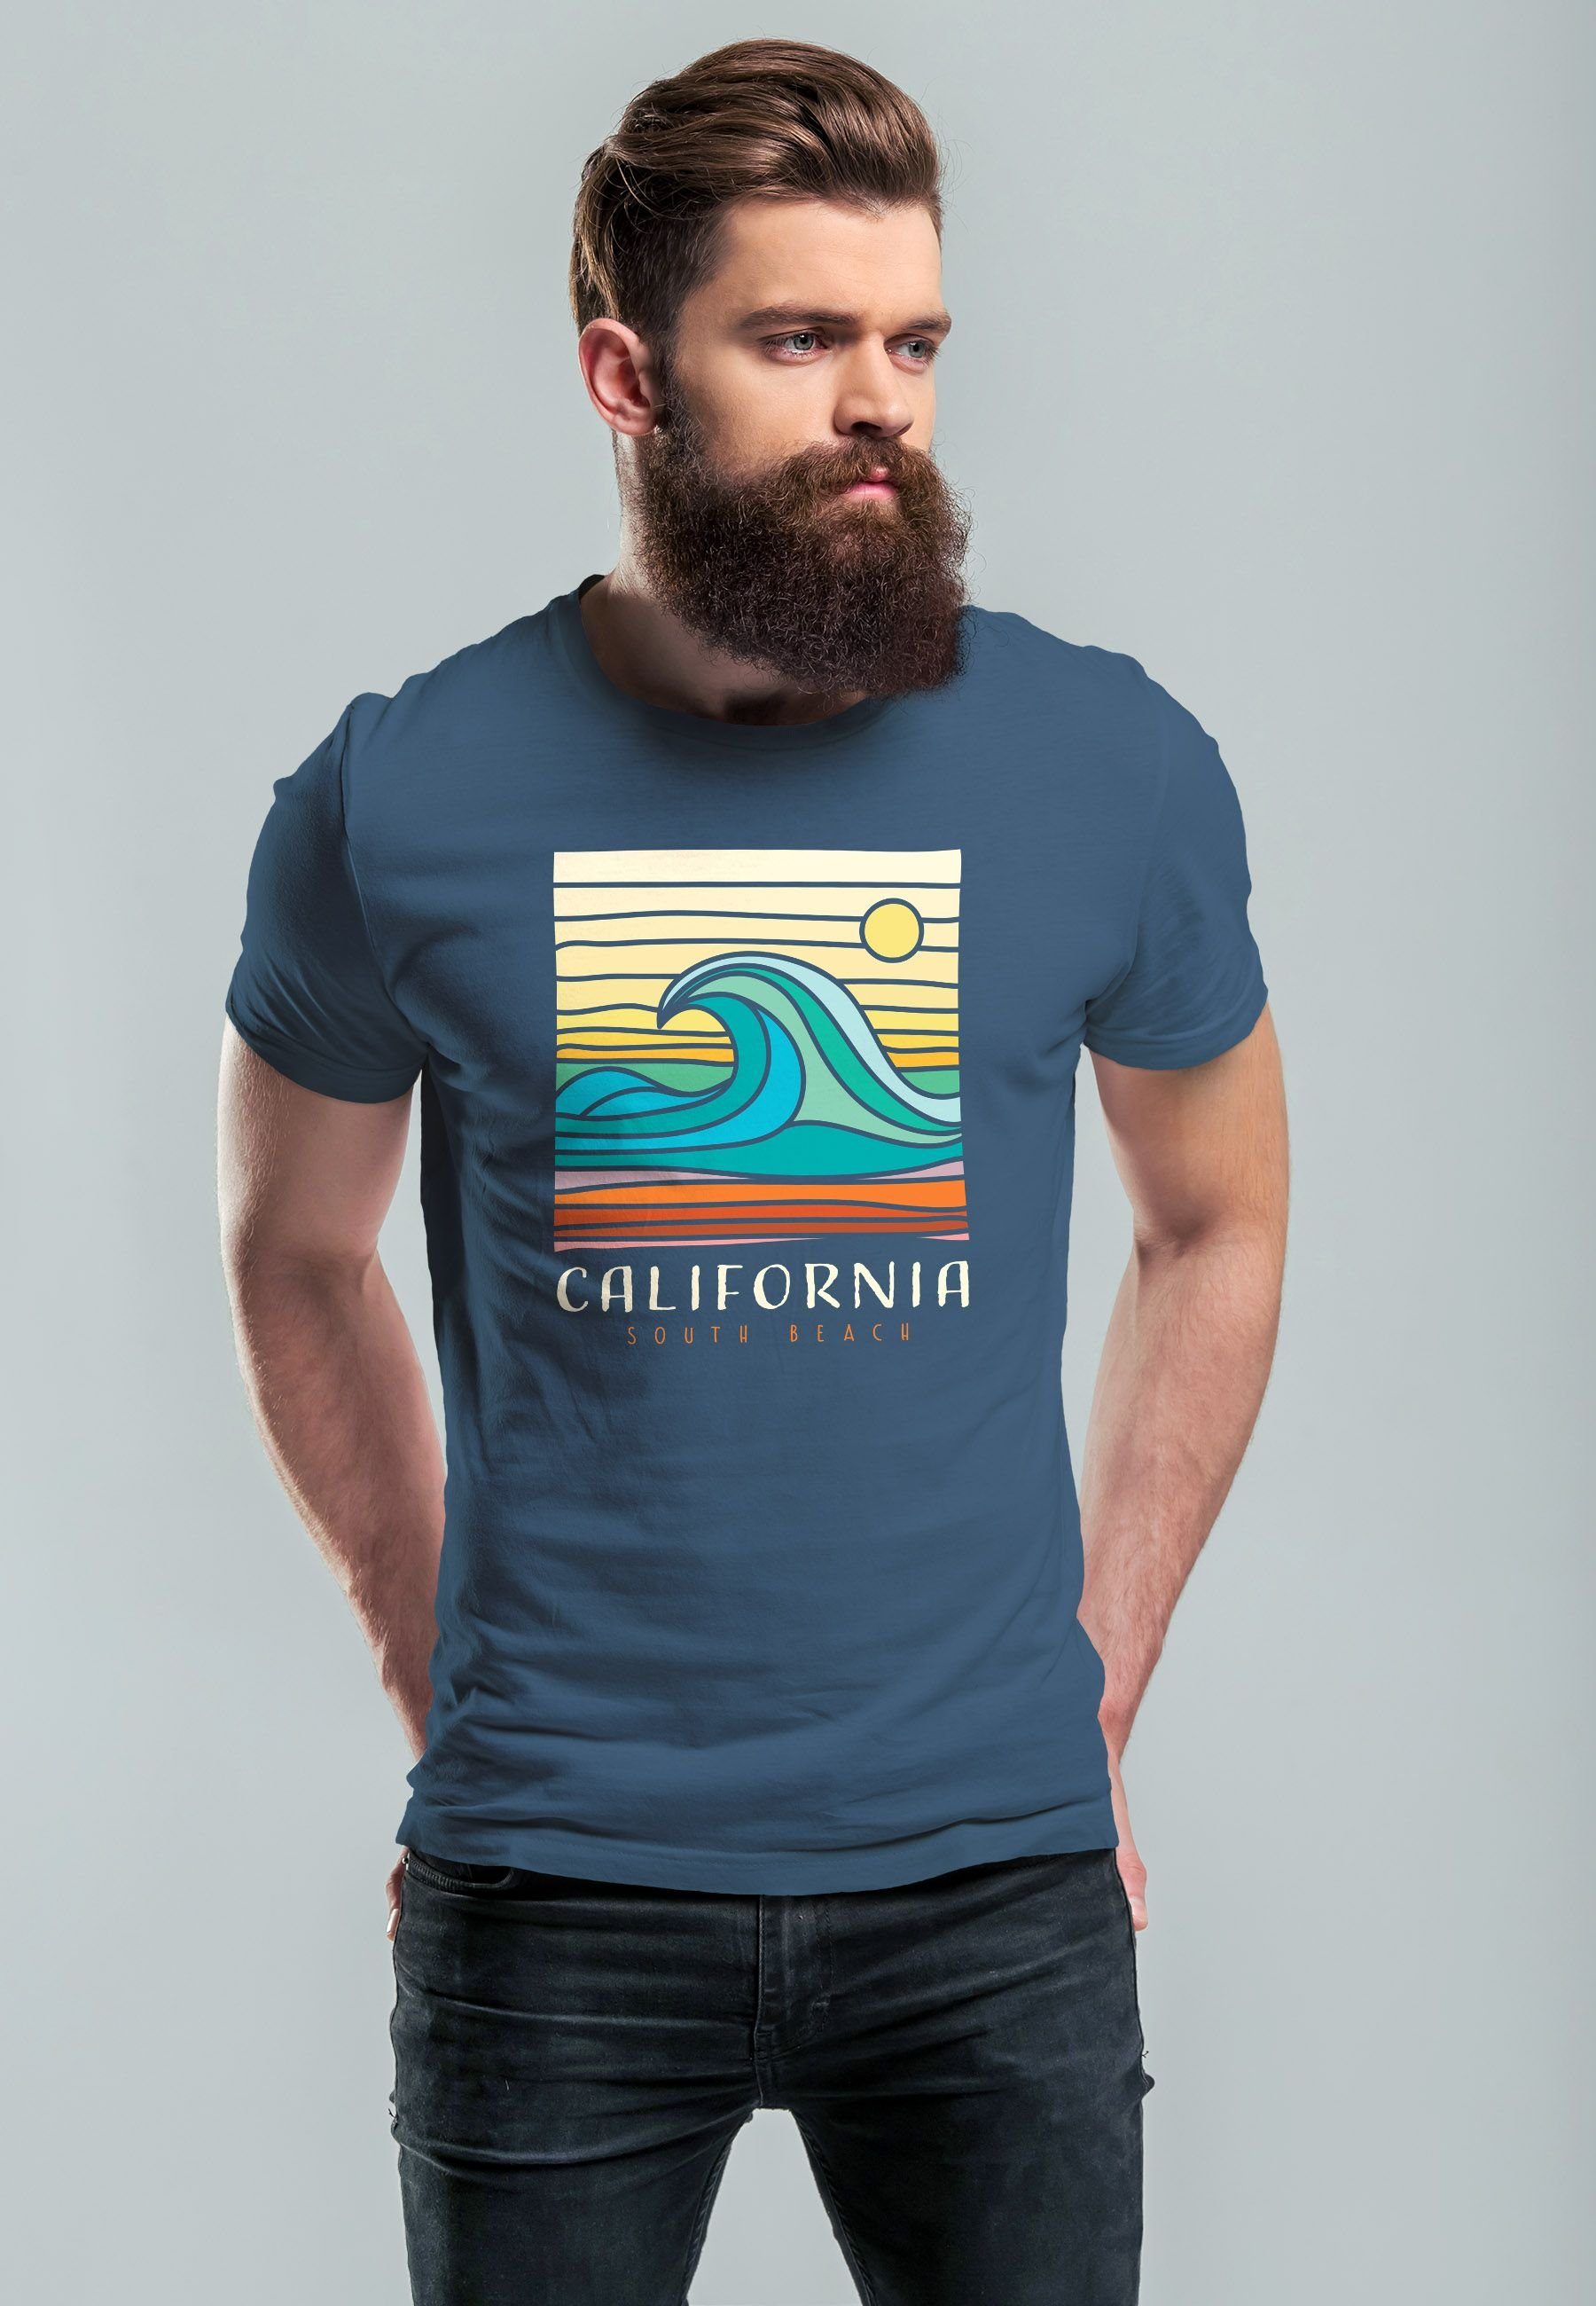 Neverless Print-Shirt Herren T-Shirt California Wave denim Print Aufdruc blue Surfing South Beach Welle mit Print